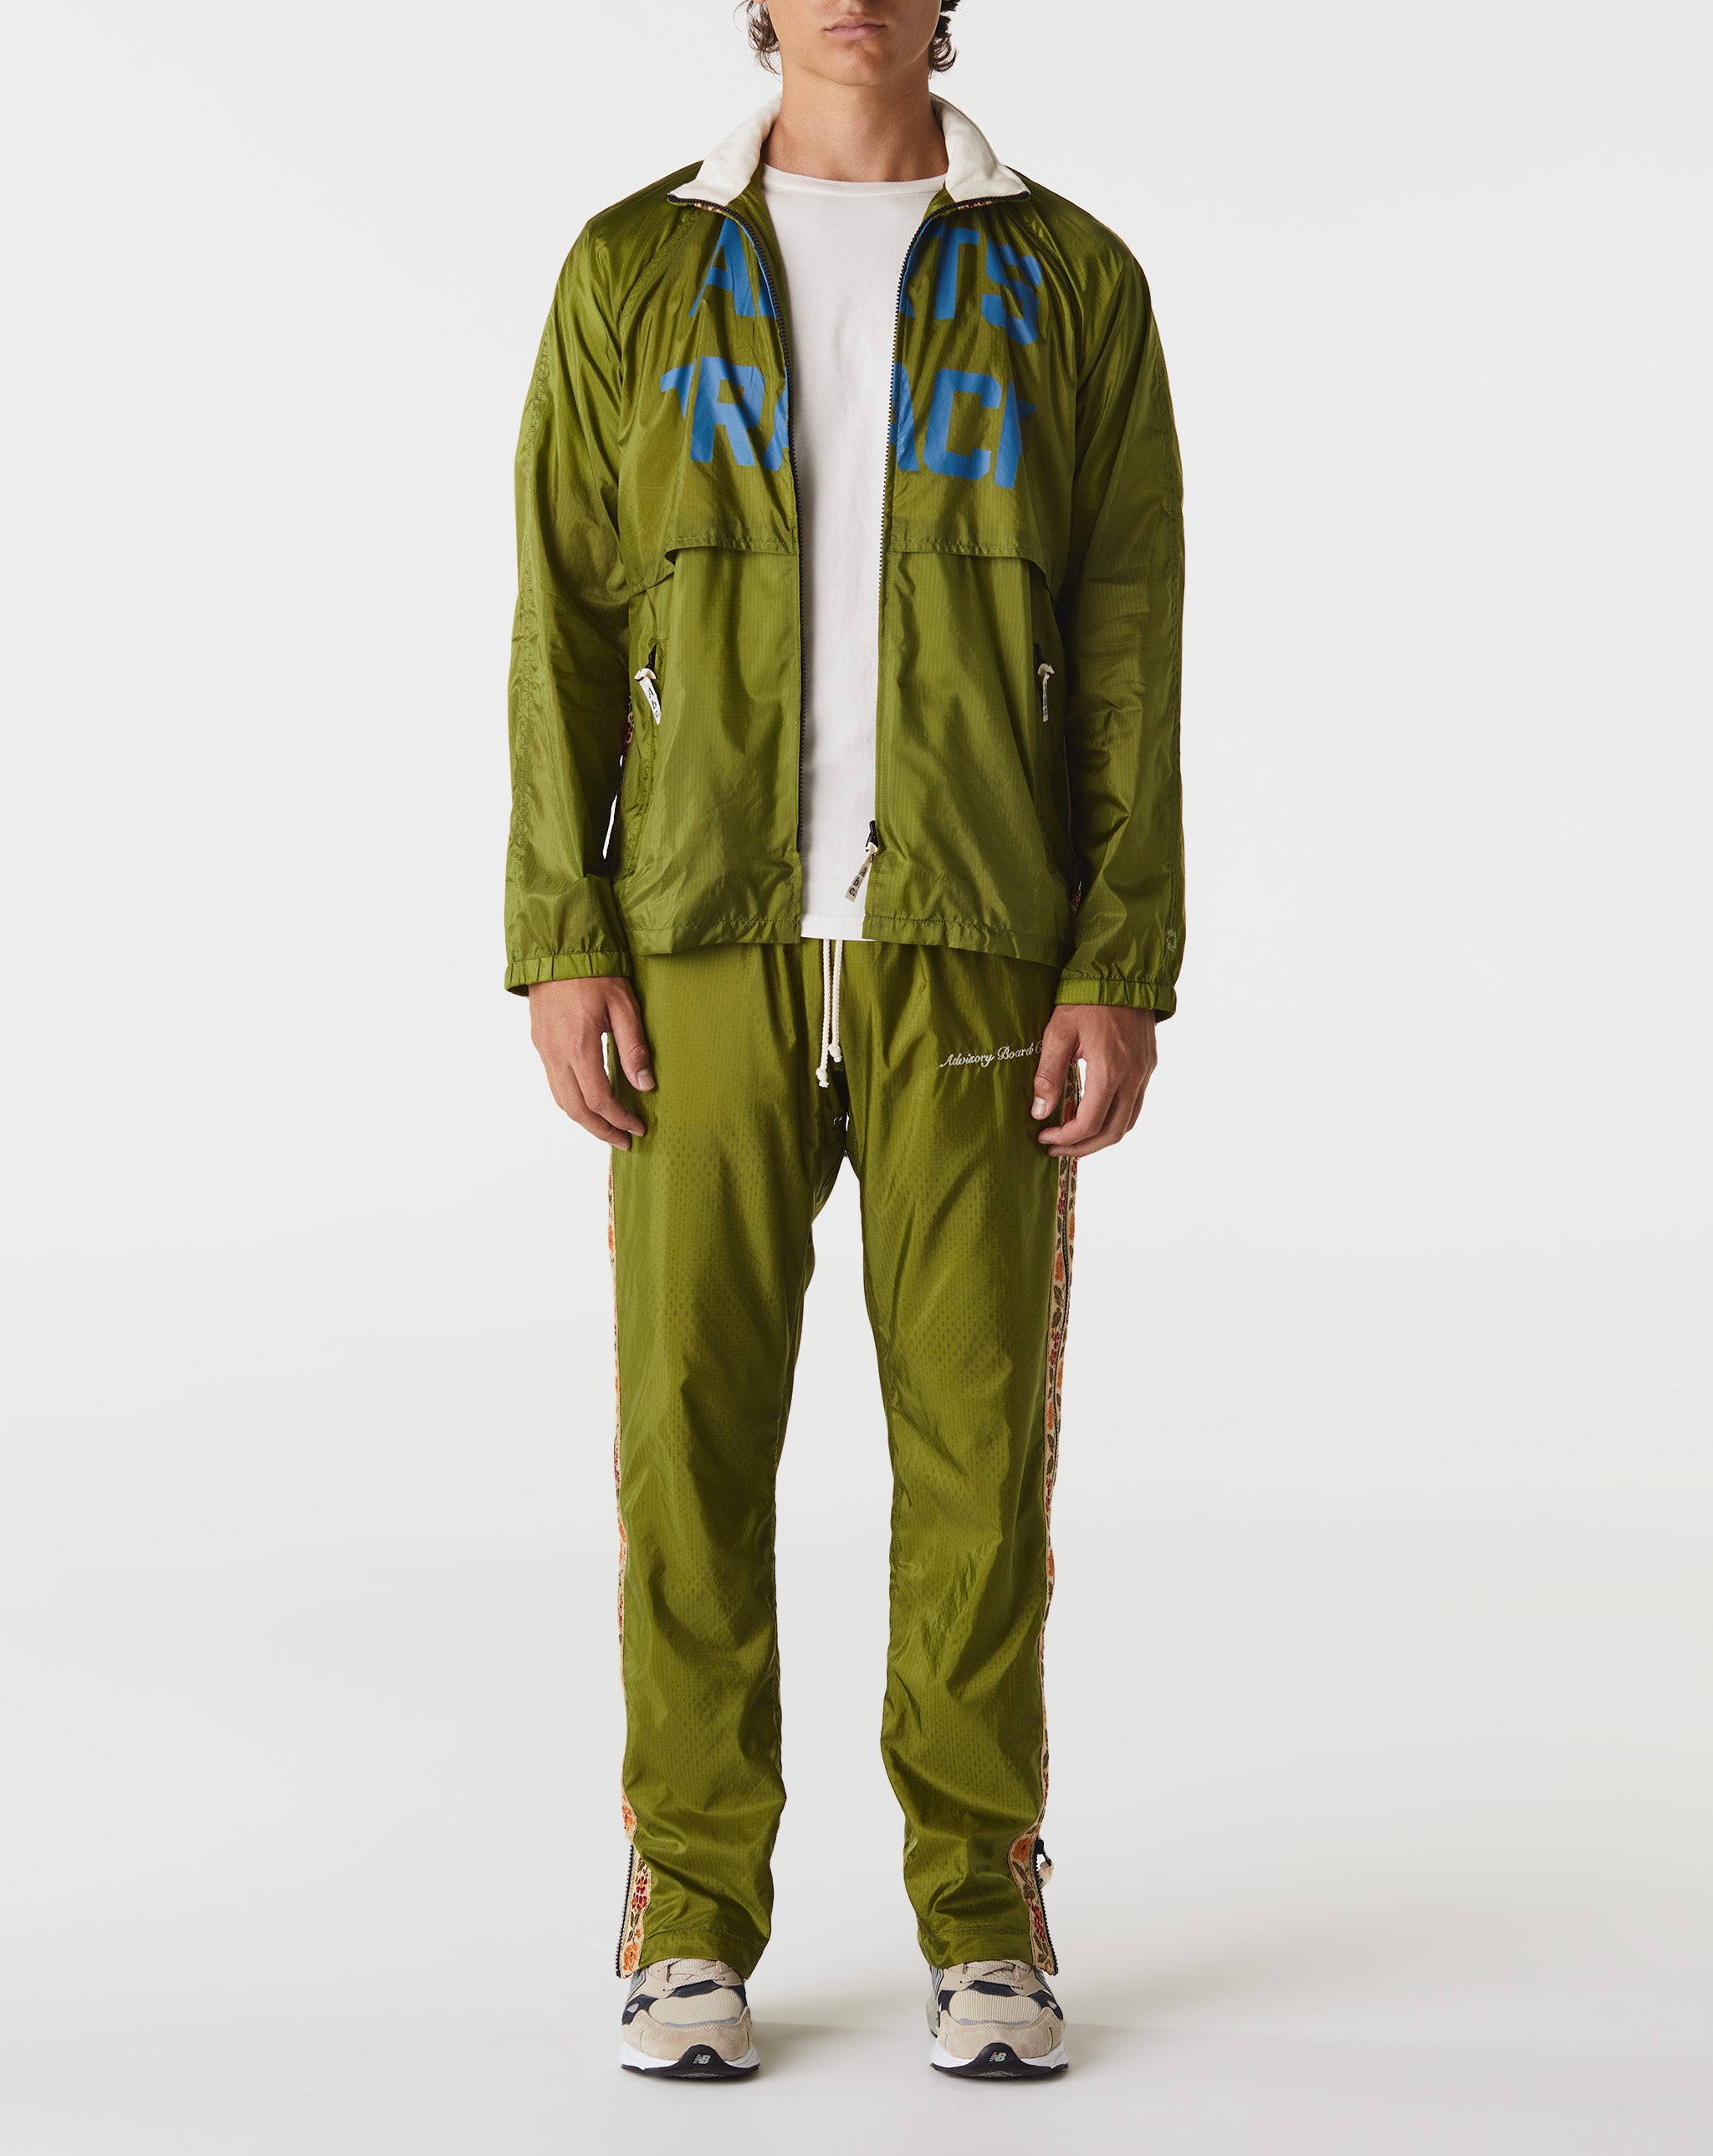 Sherpa Paneled Hooded Jacket Nike Authentics Varsity Jacket  - Cheap Erlebniswelt-fliegenfischen Jordan outlet